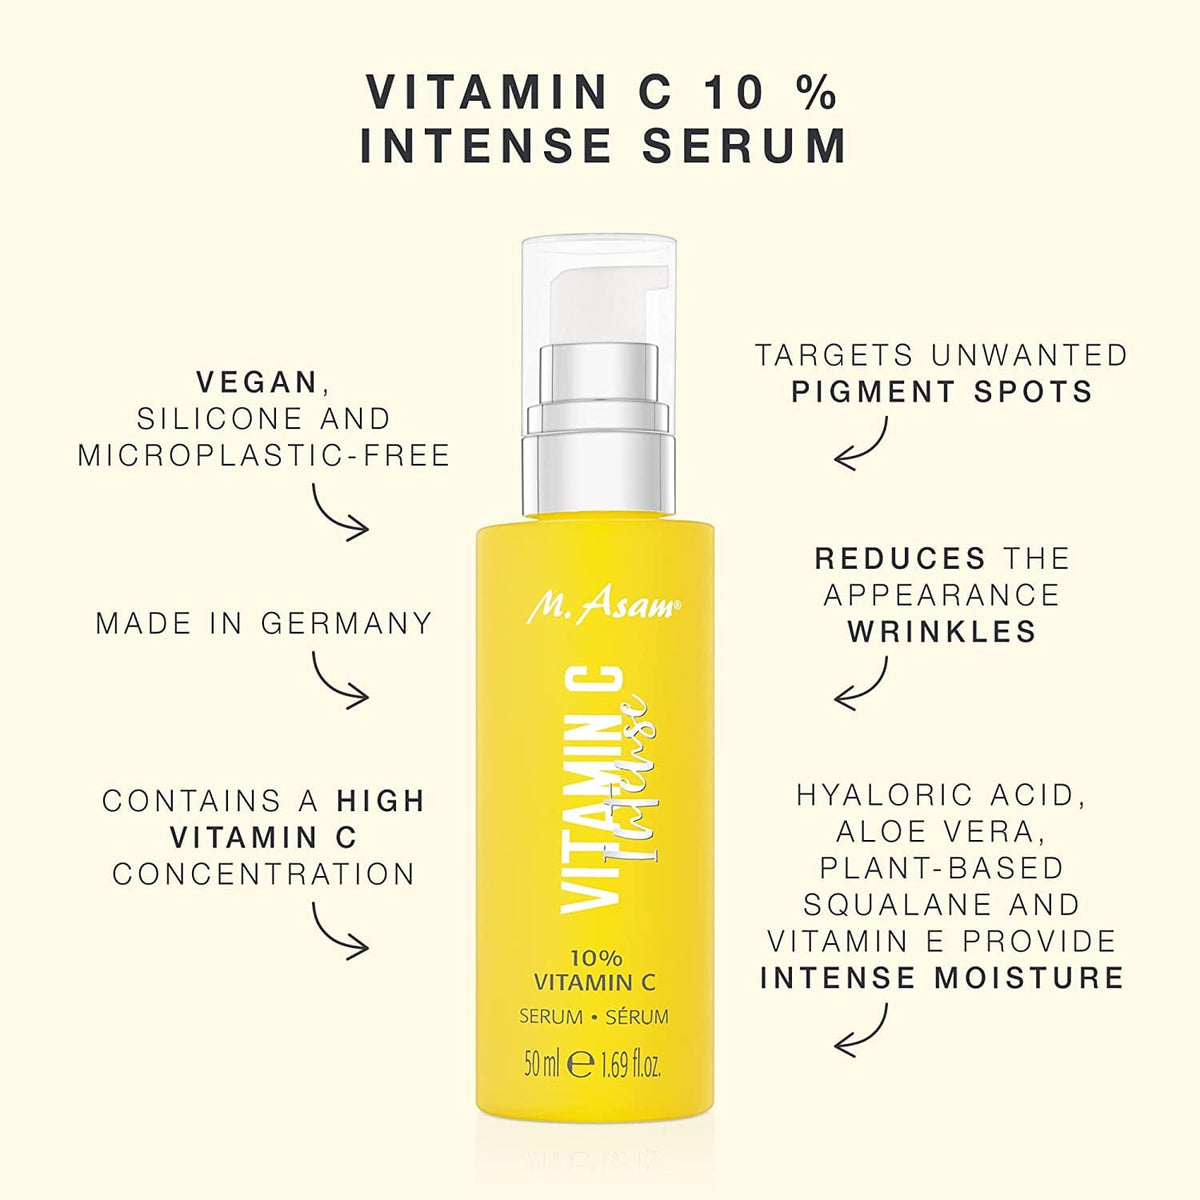 M. Asam Vitamin C 10% Intense Serum